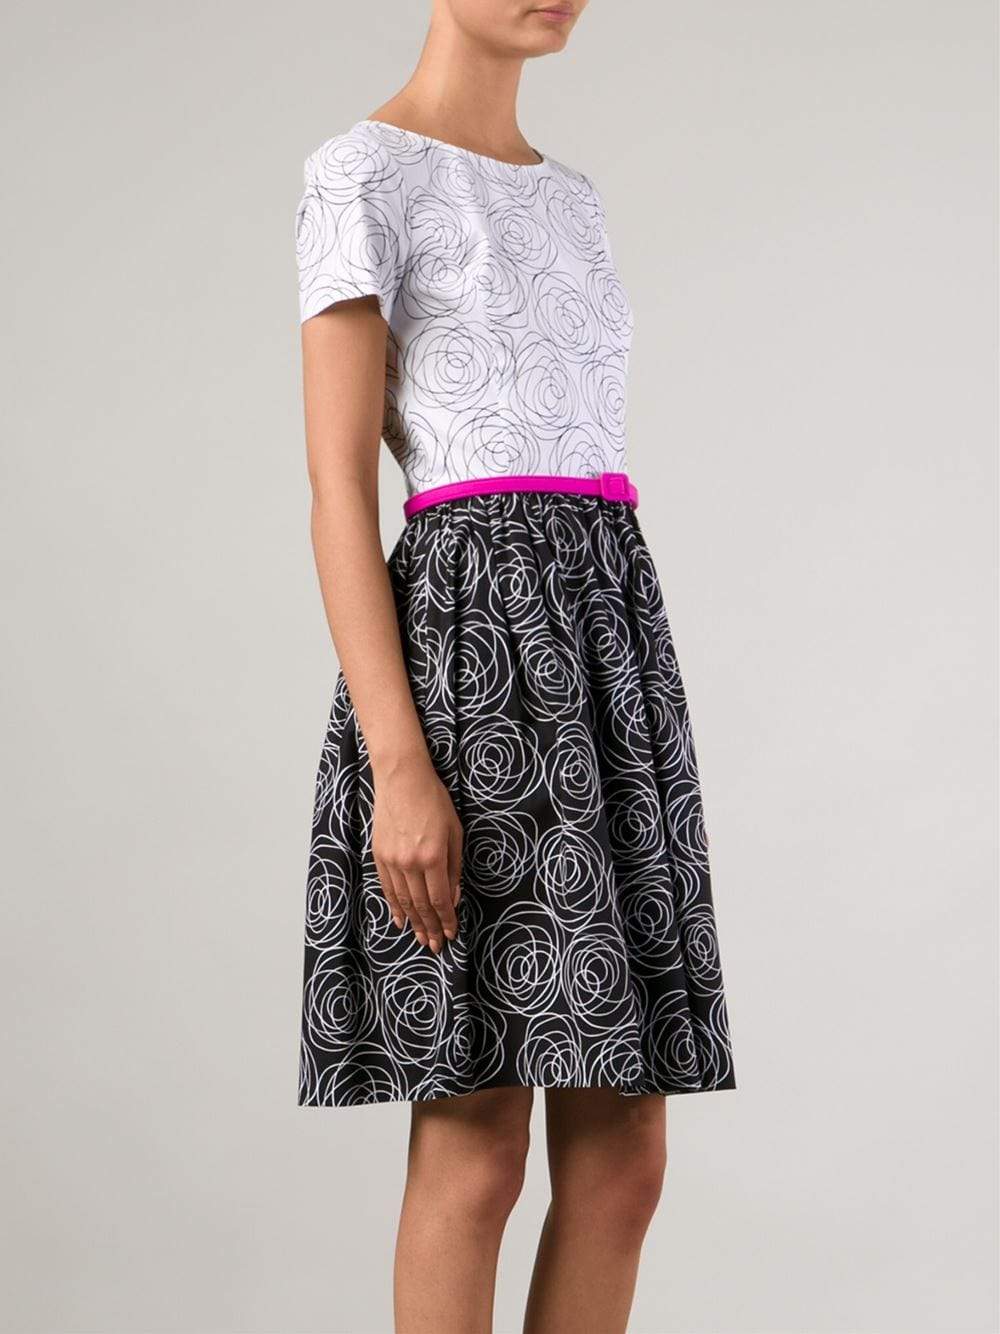 OSCAR DE LA RENTA-Floral Cotton Dress-